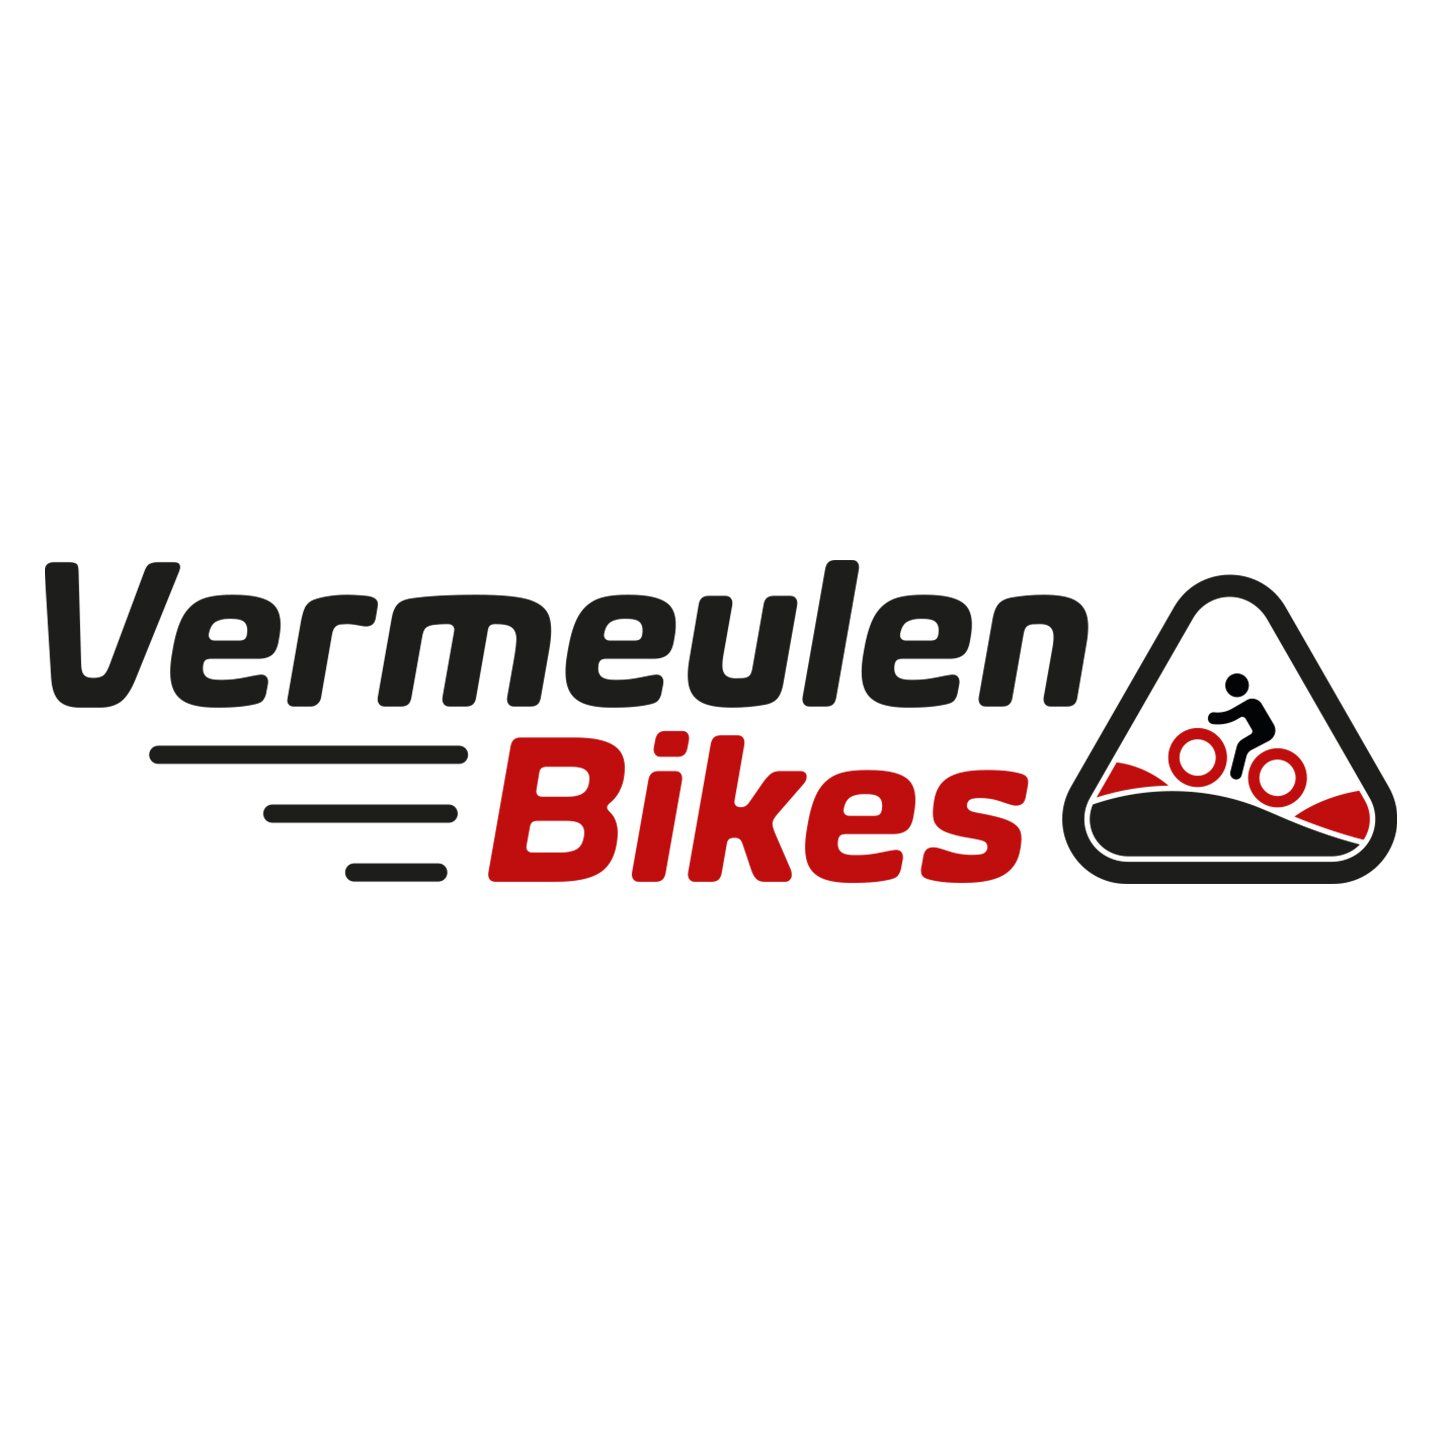 (c) Vermeulenbikes.nl